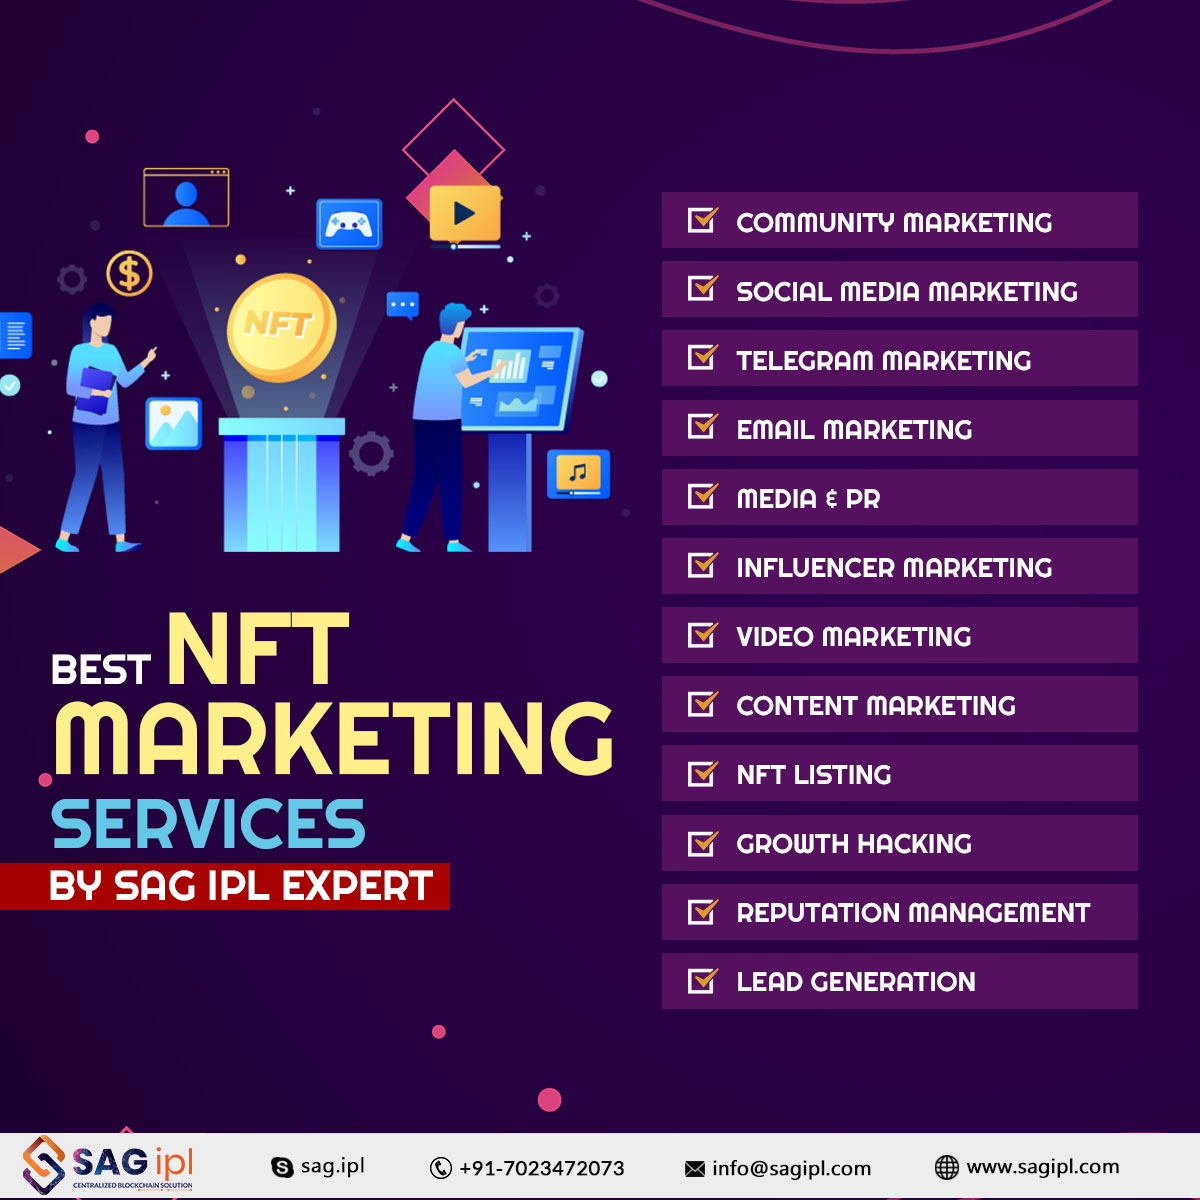 Best NFT Marketing Services